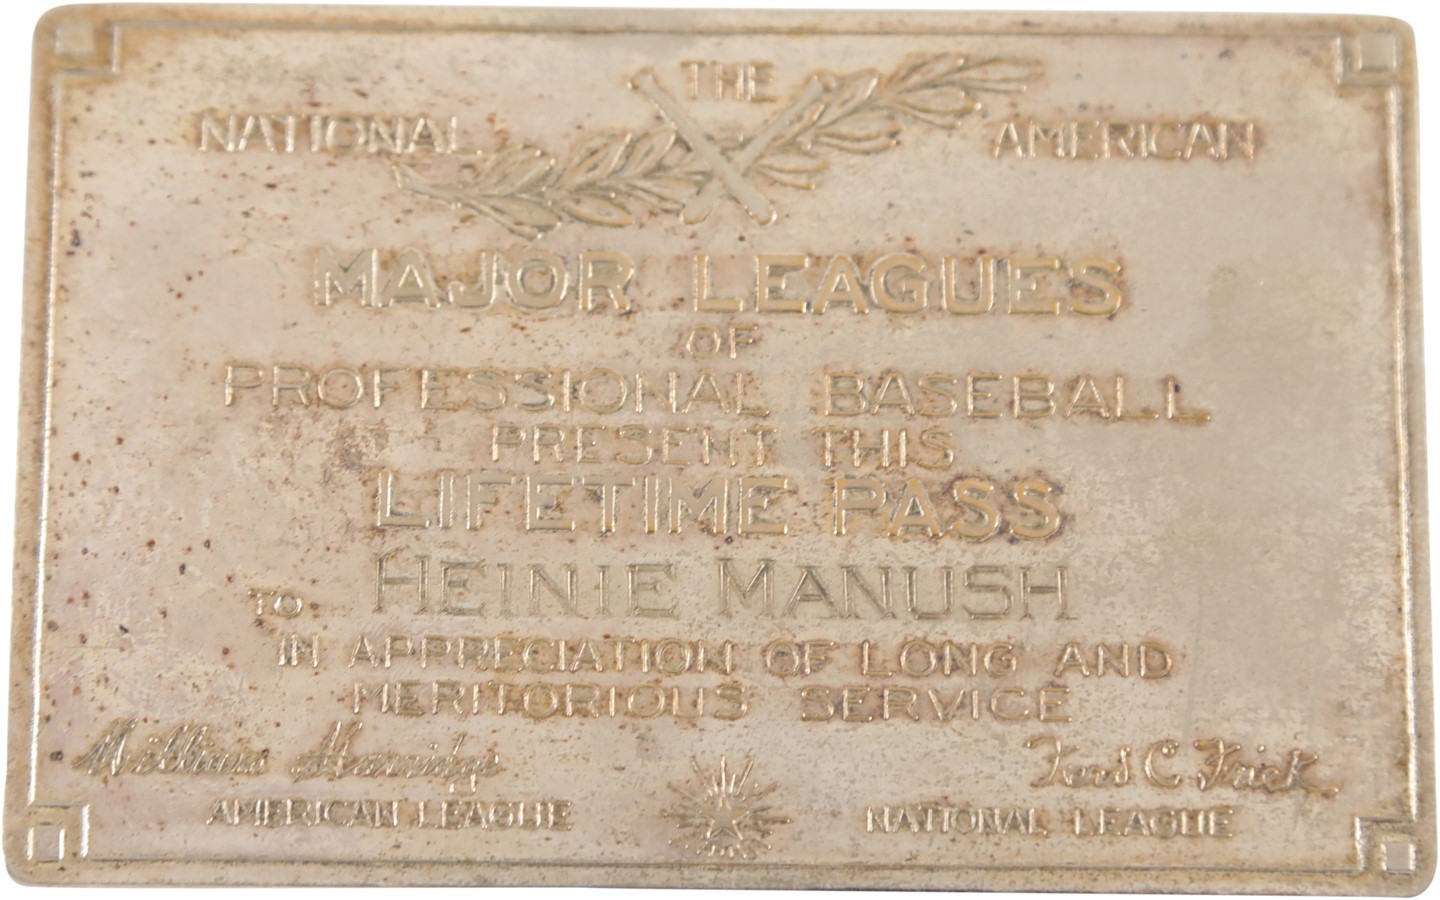 Heinie Manush Major Leagues Lifetime "Silver" Pass